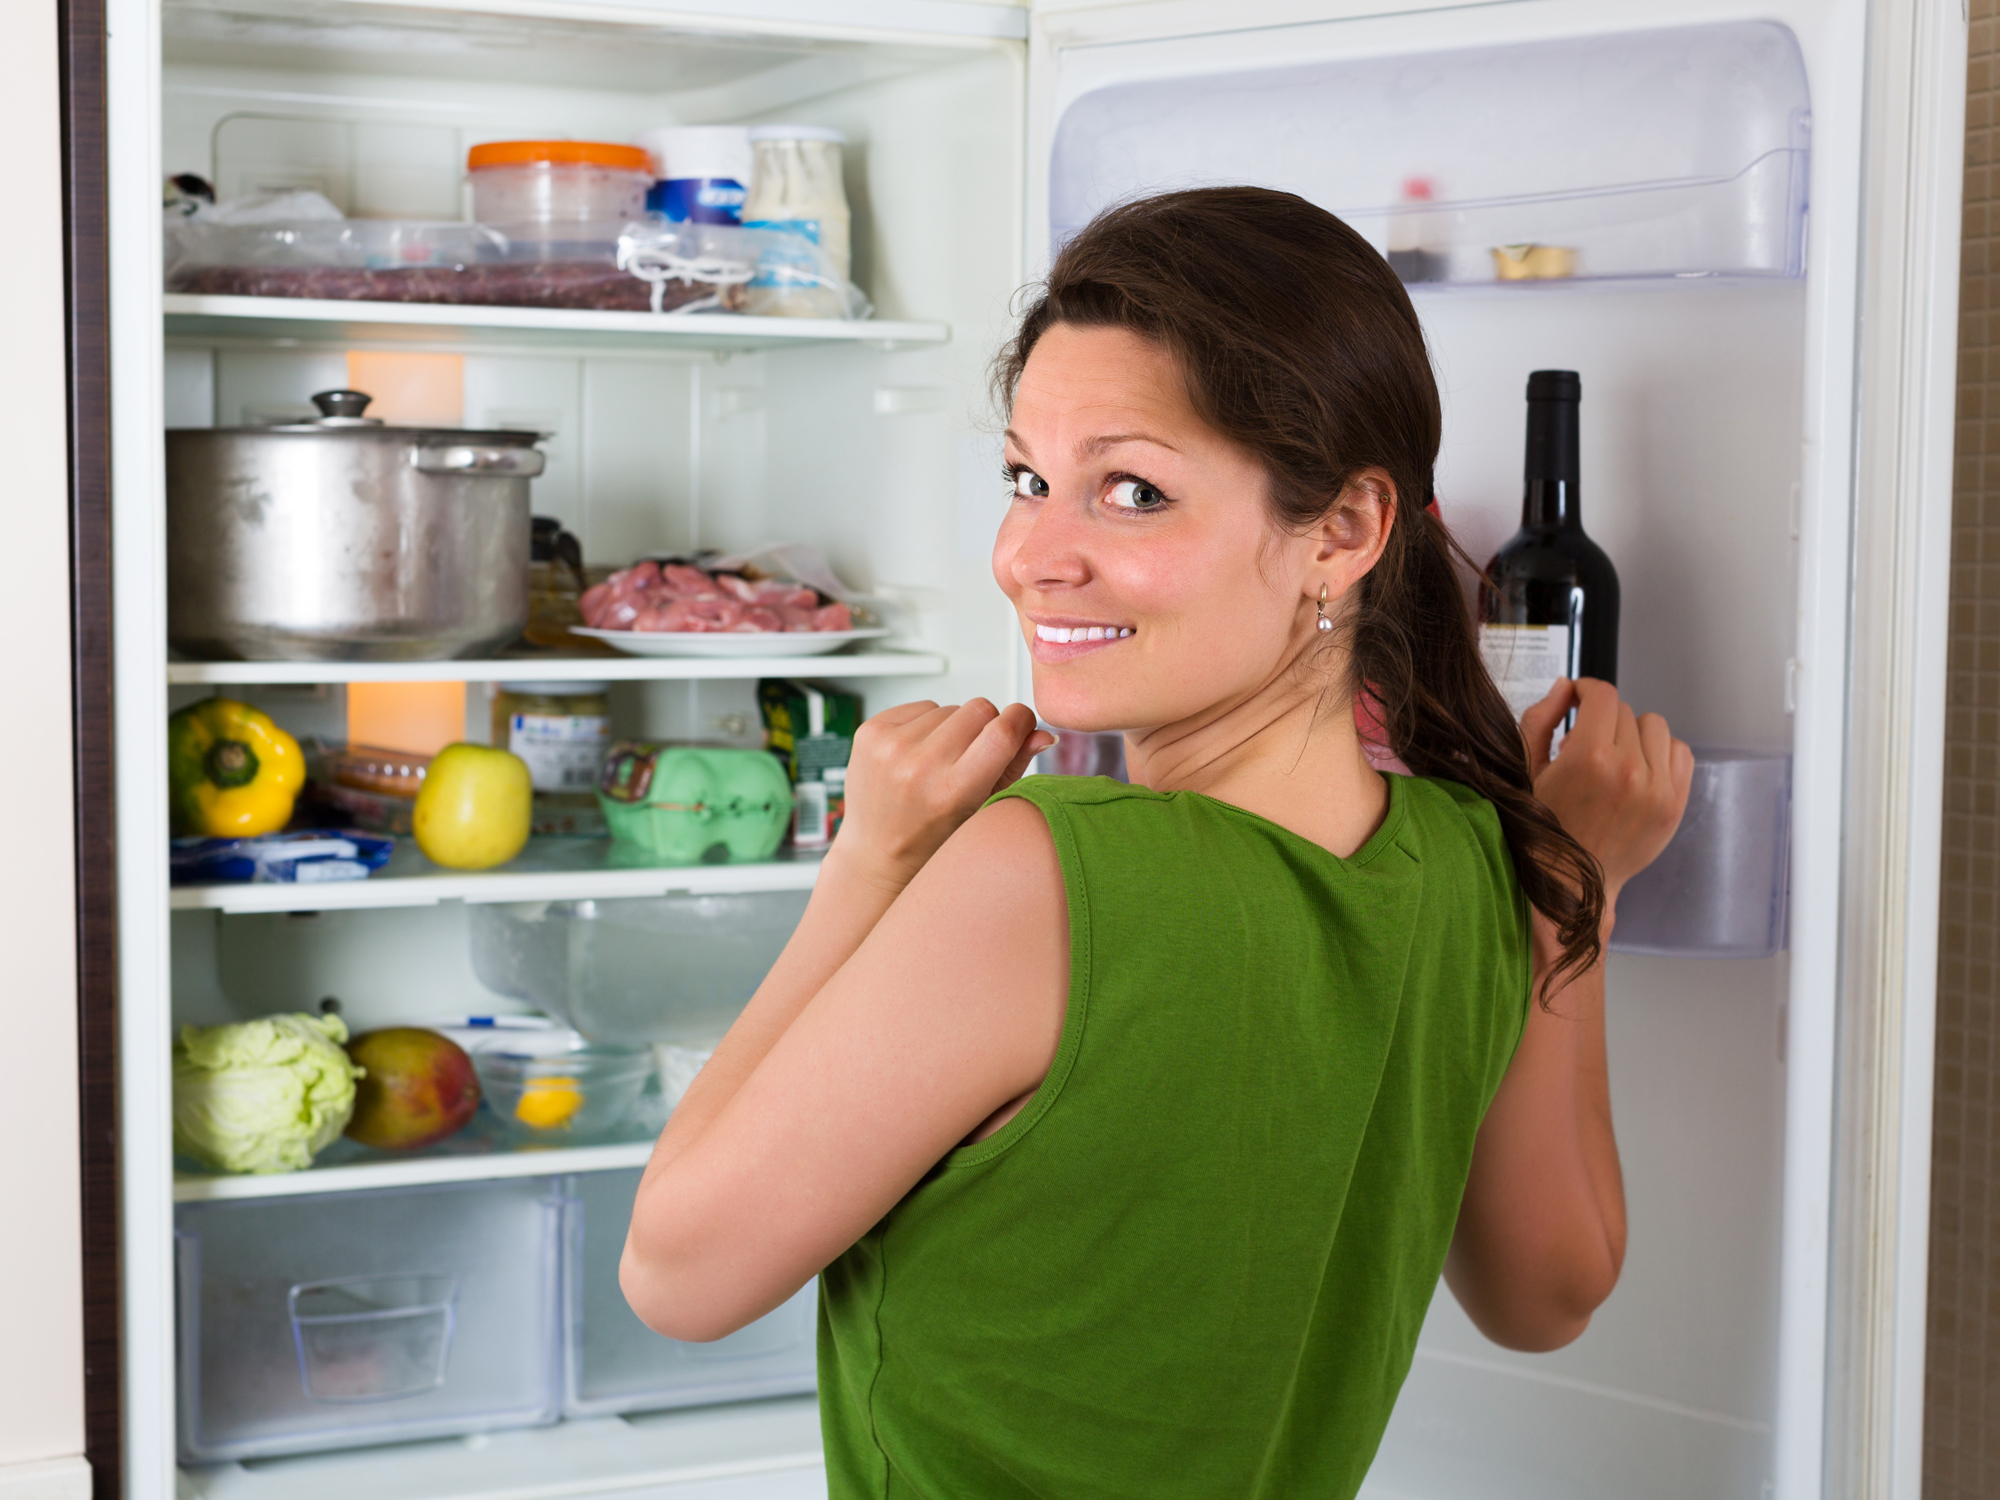 Brain booster found in your refrigerator